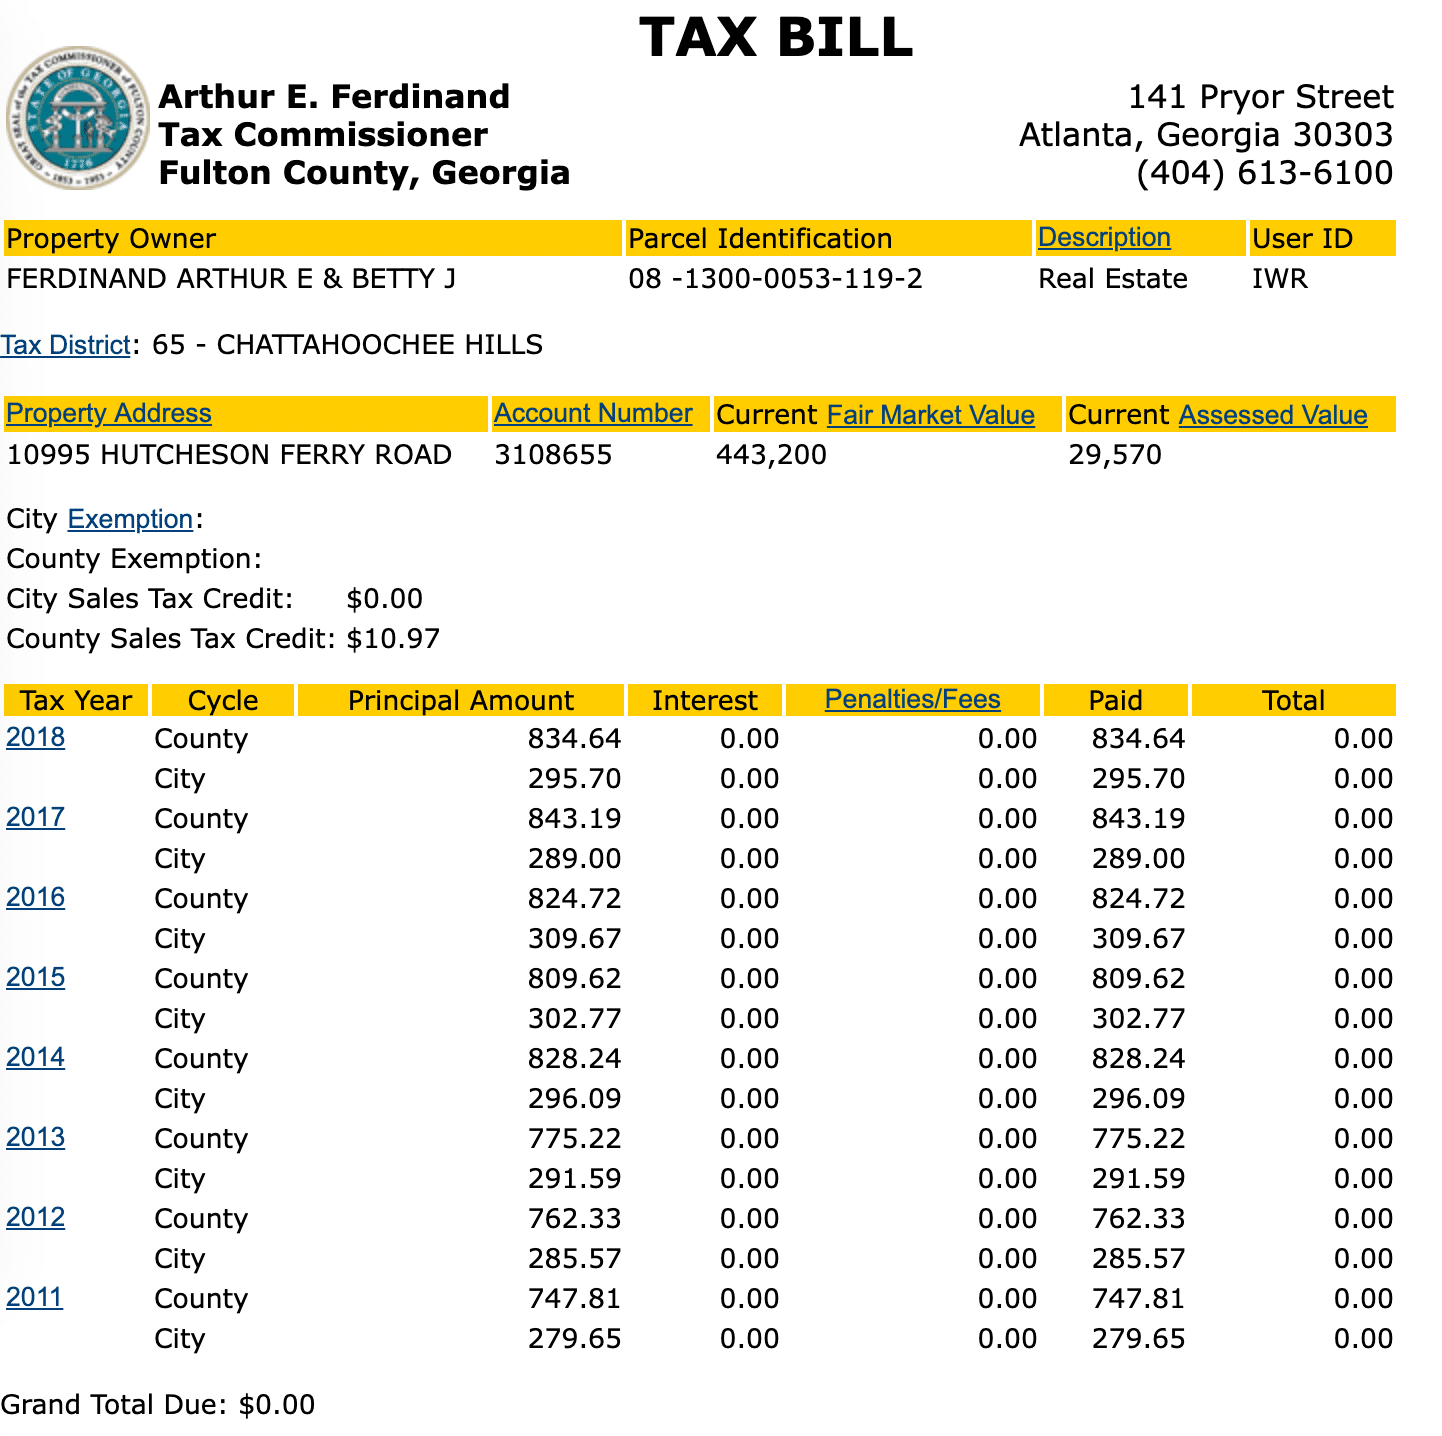 Arthur Ferdinand Pays Little Taxes https://www.johnscreekpost.com